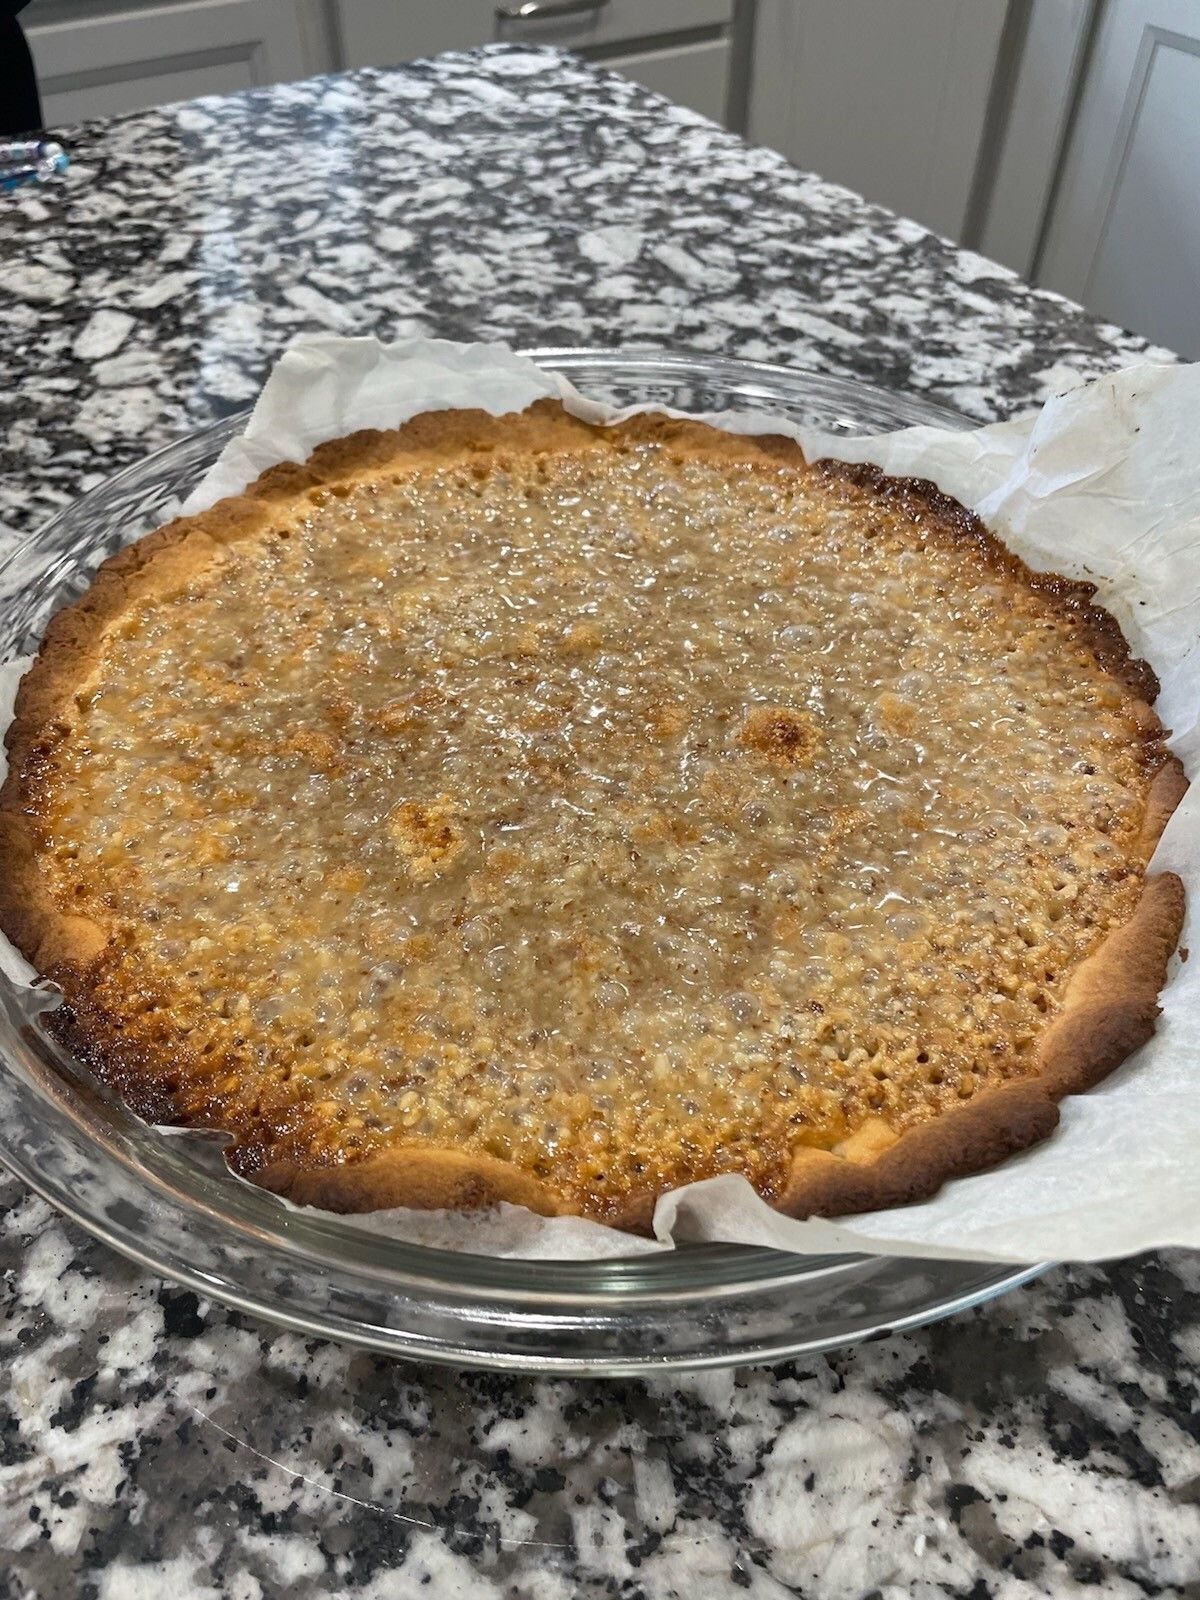 Our Community Table: Tikva Shemesh's Almond Cake